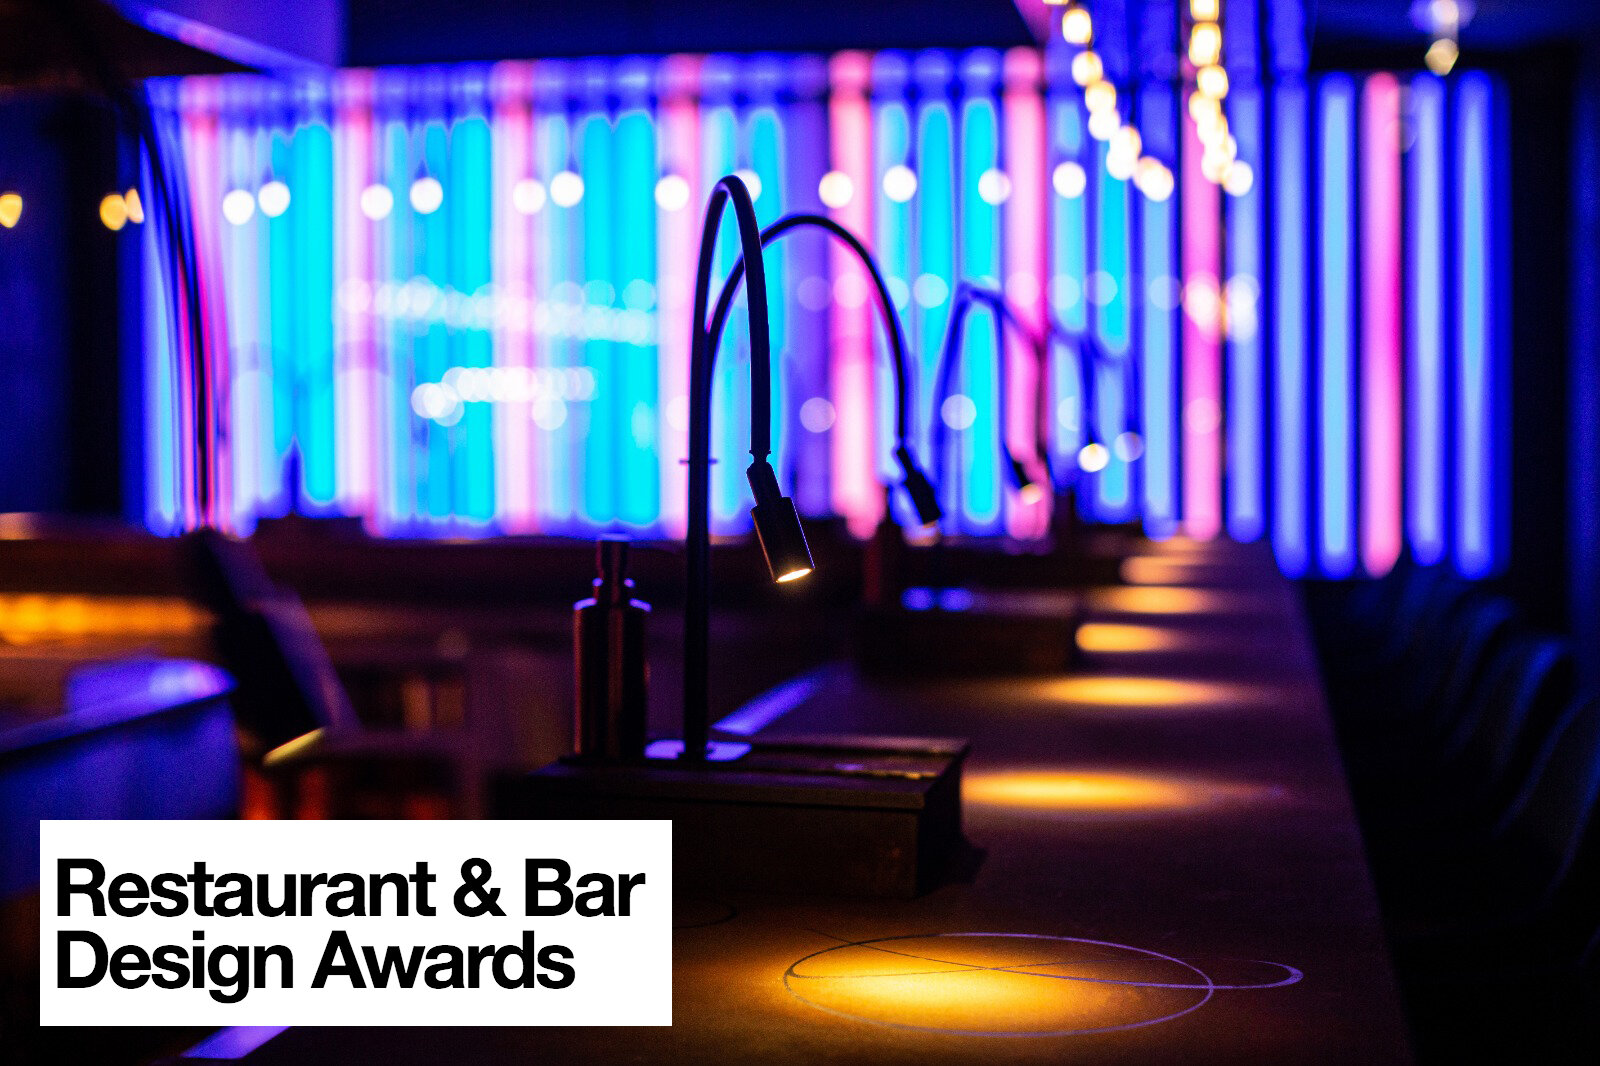 ‘8’ : Restaurant & Bar Design Awards